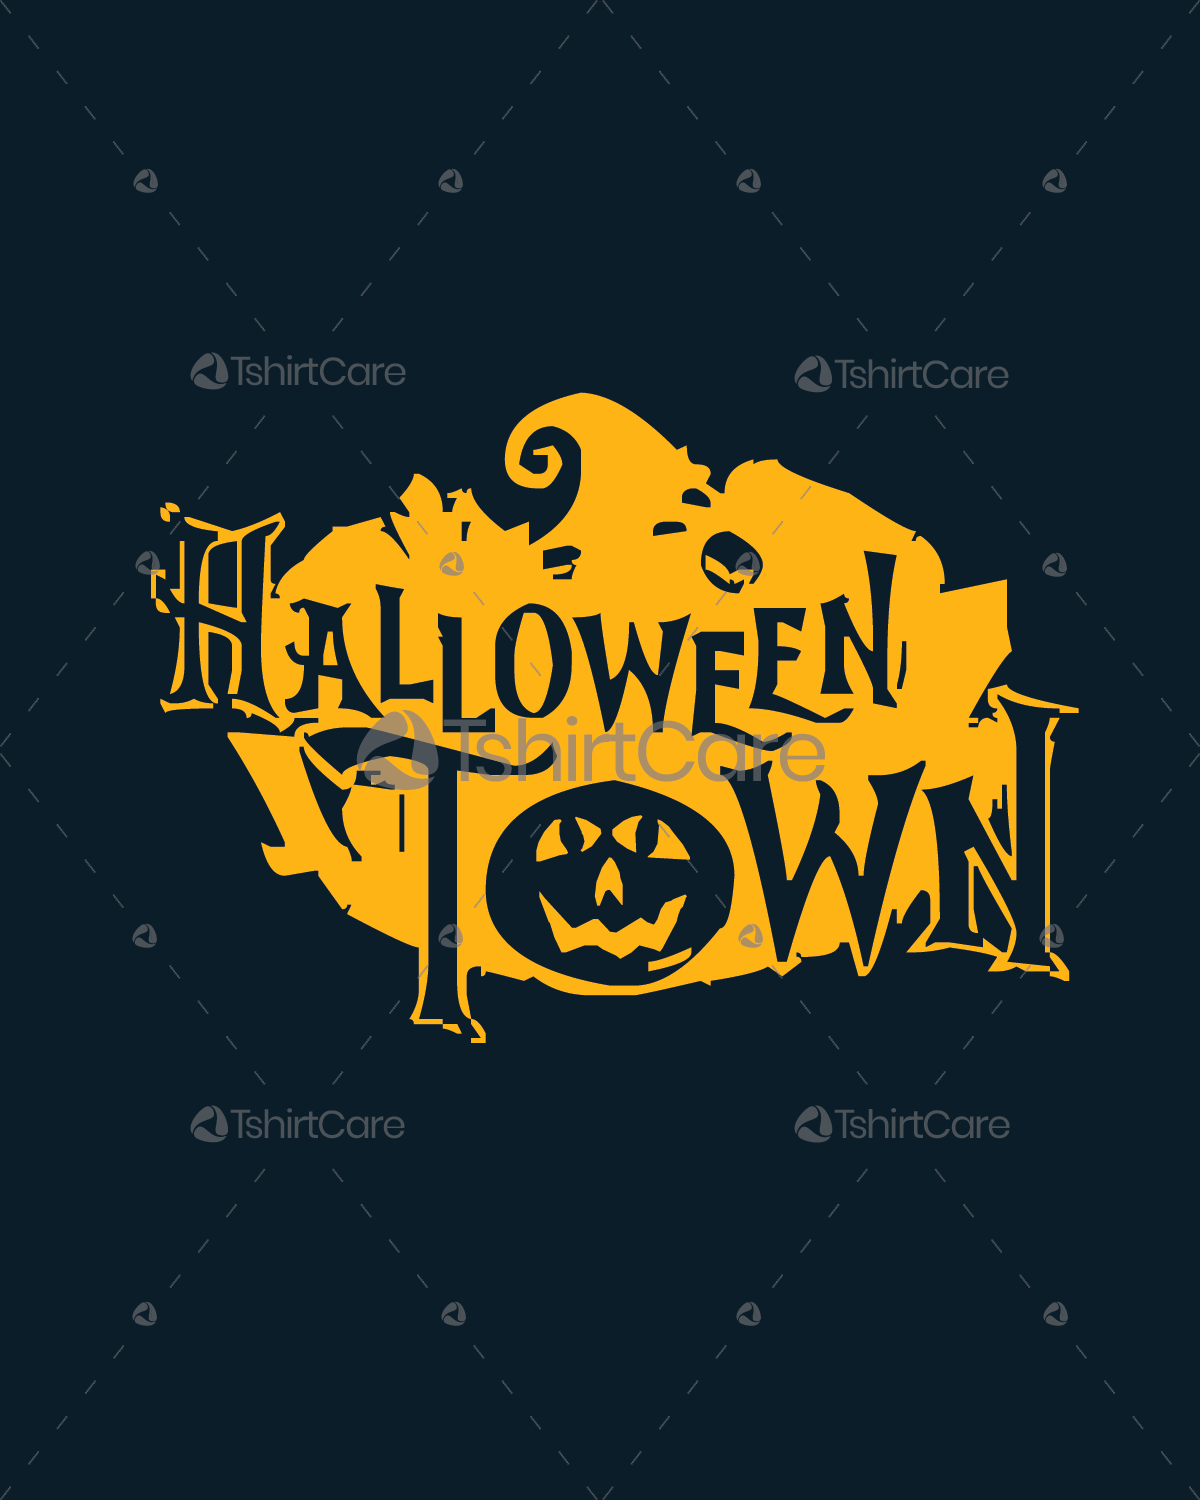 Halloweentown Logo - Halloween town T shirt Design Happy Halloween Day Tee shirts for Men & Women